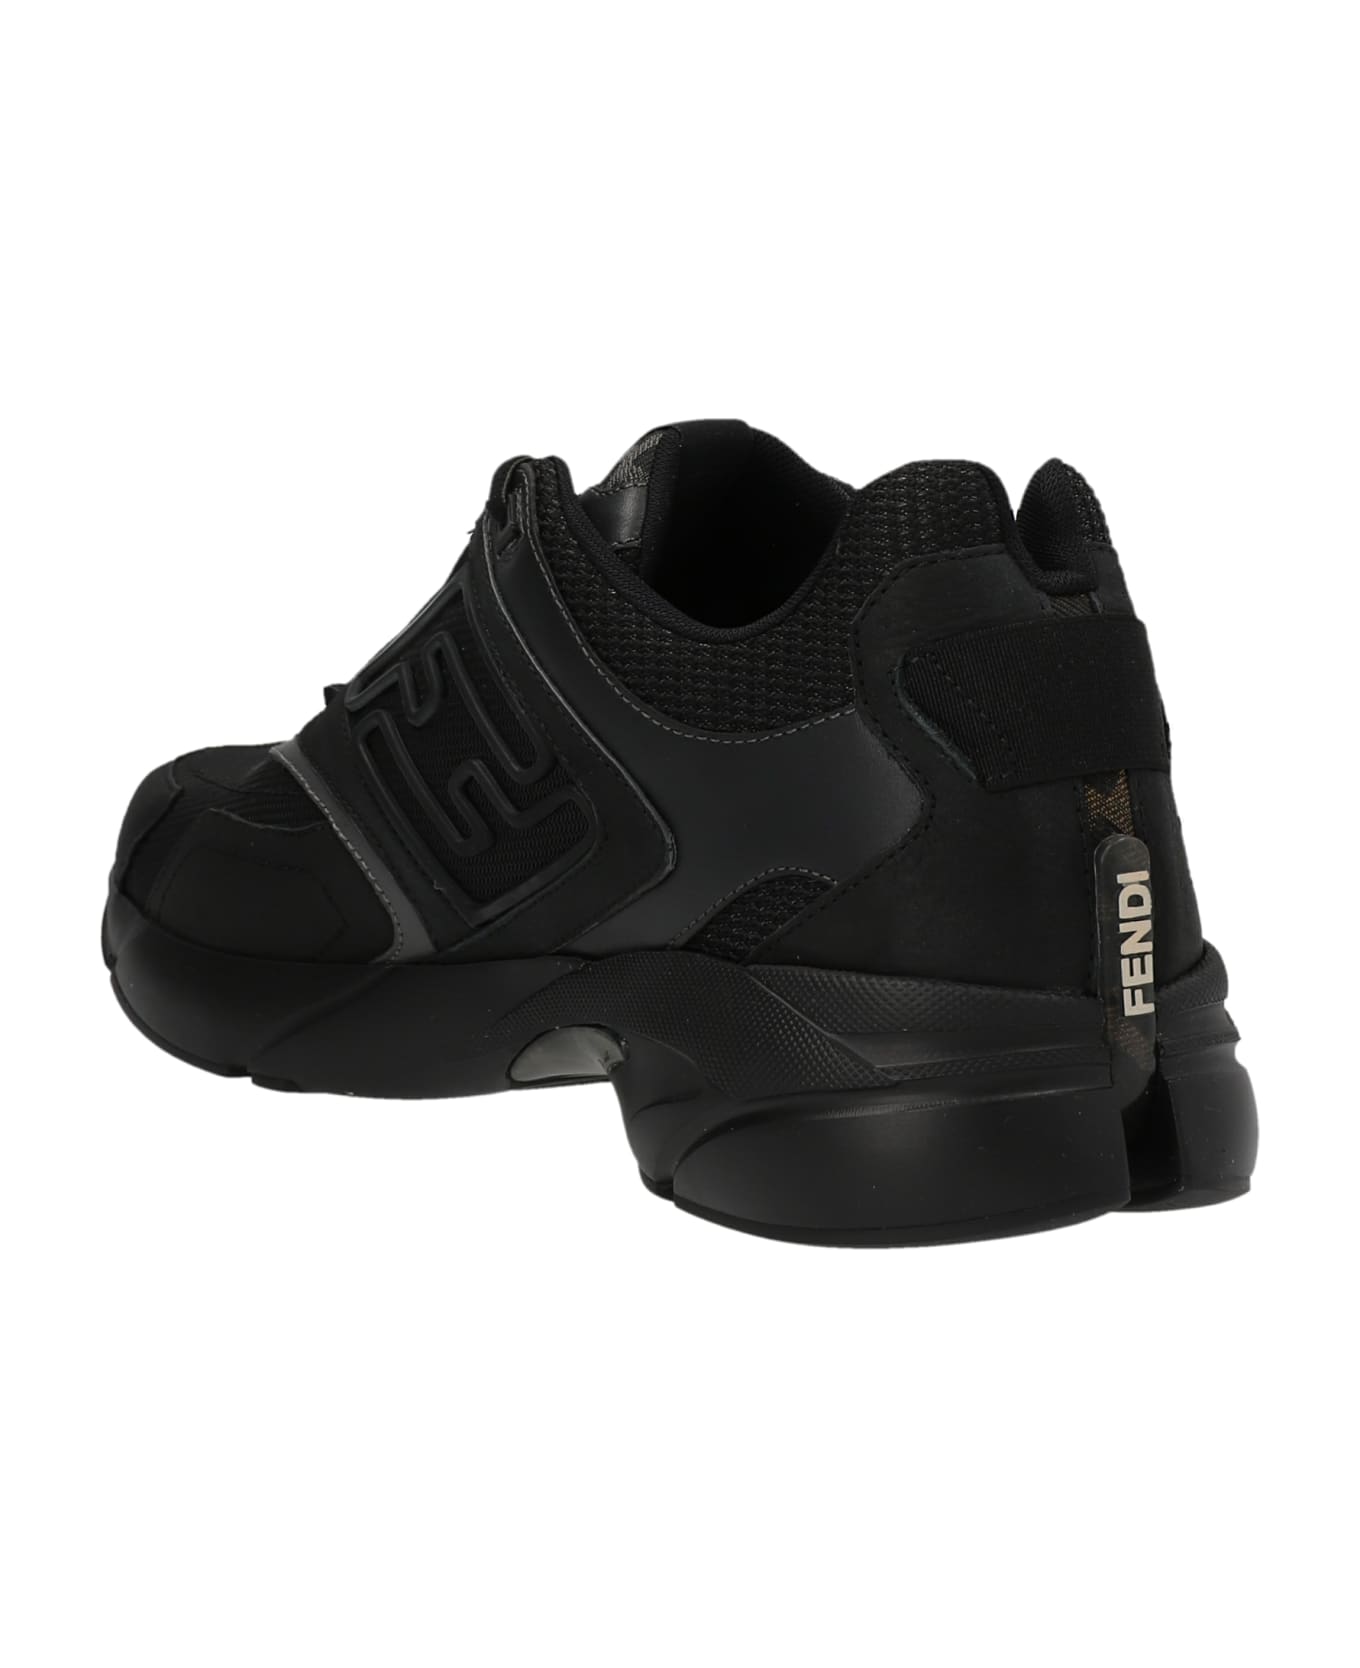 Fendi Faster Running Sneakers - Black